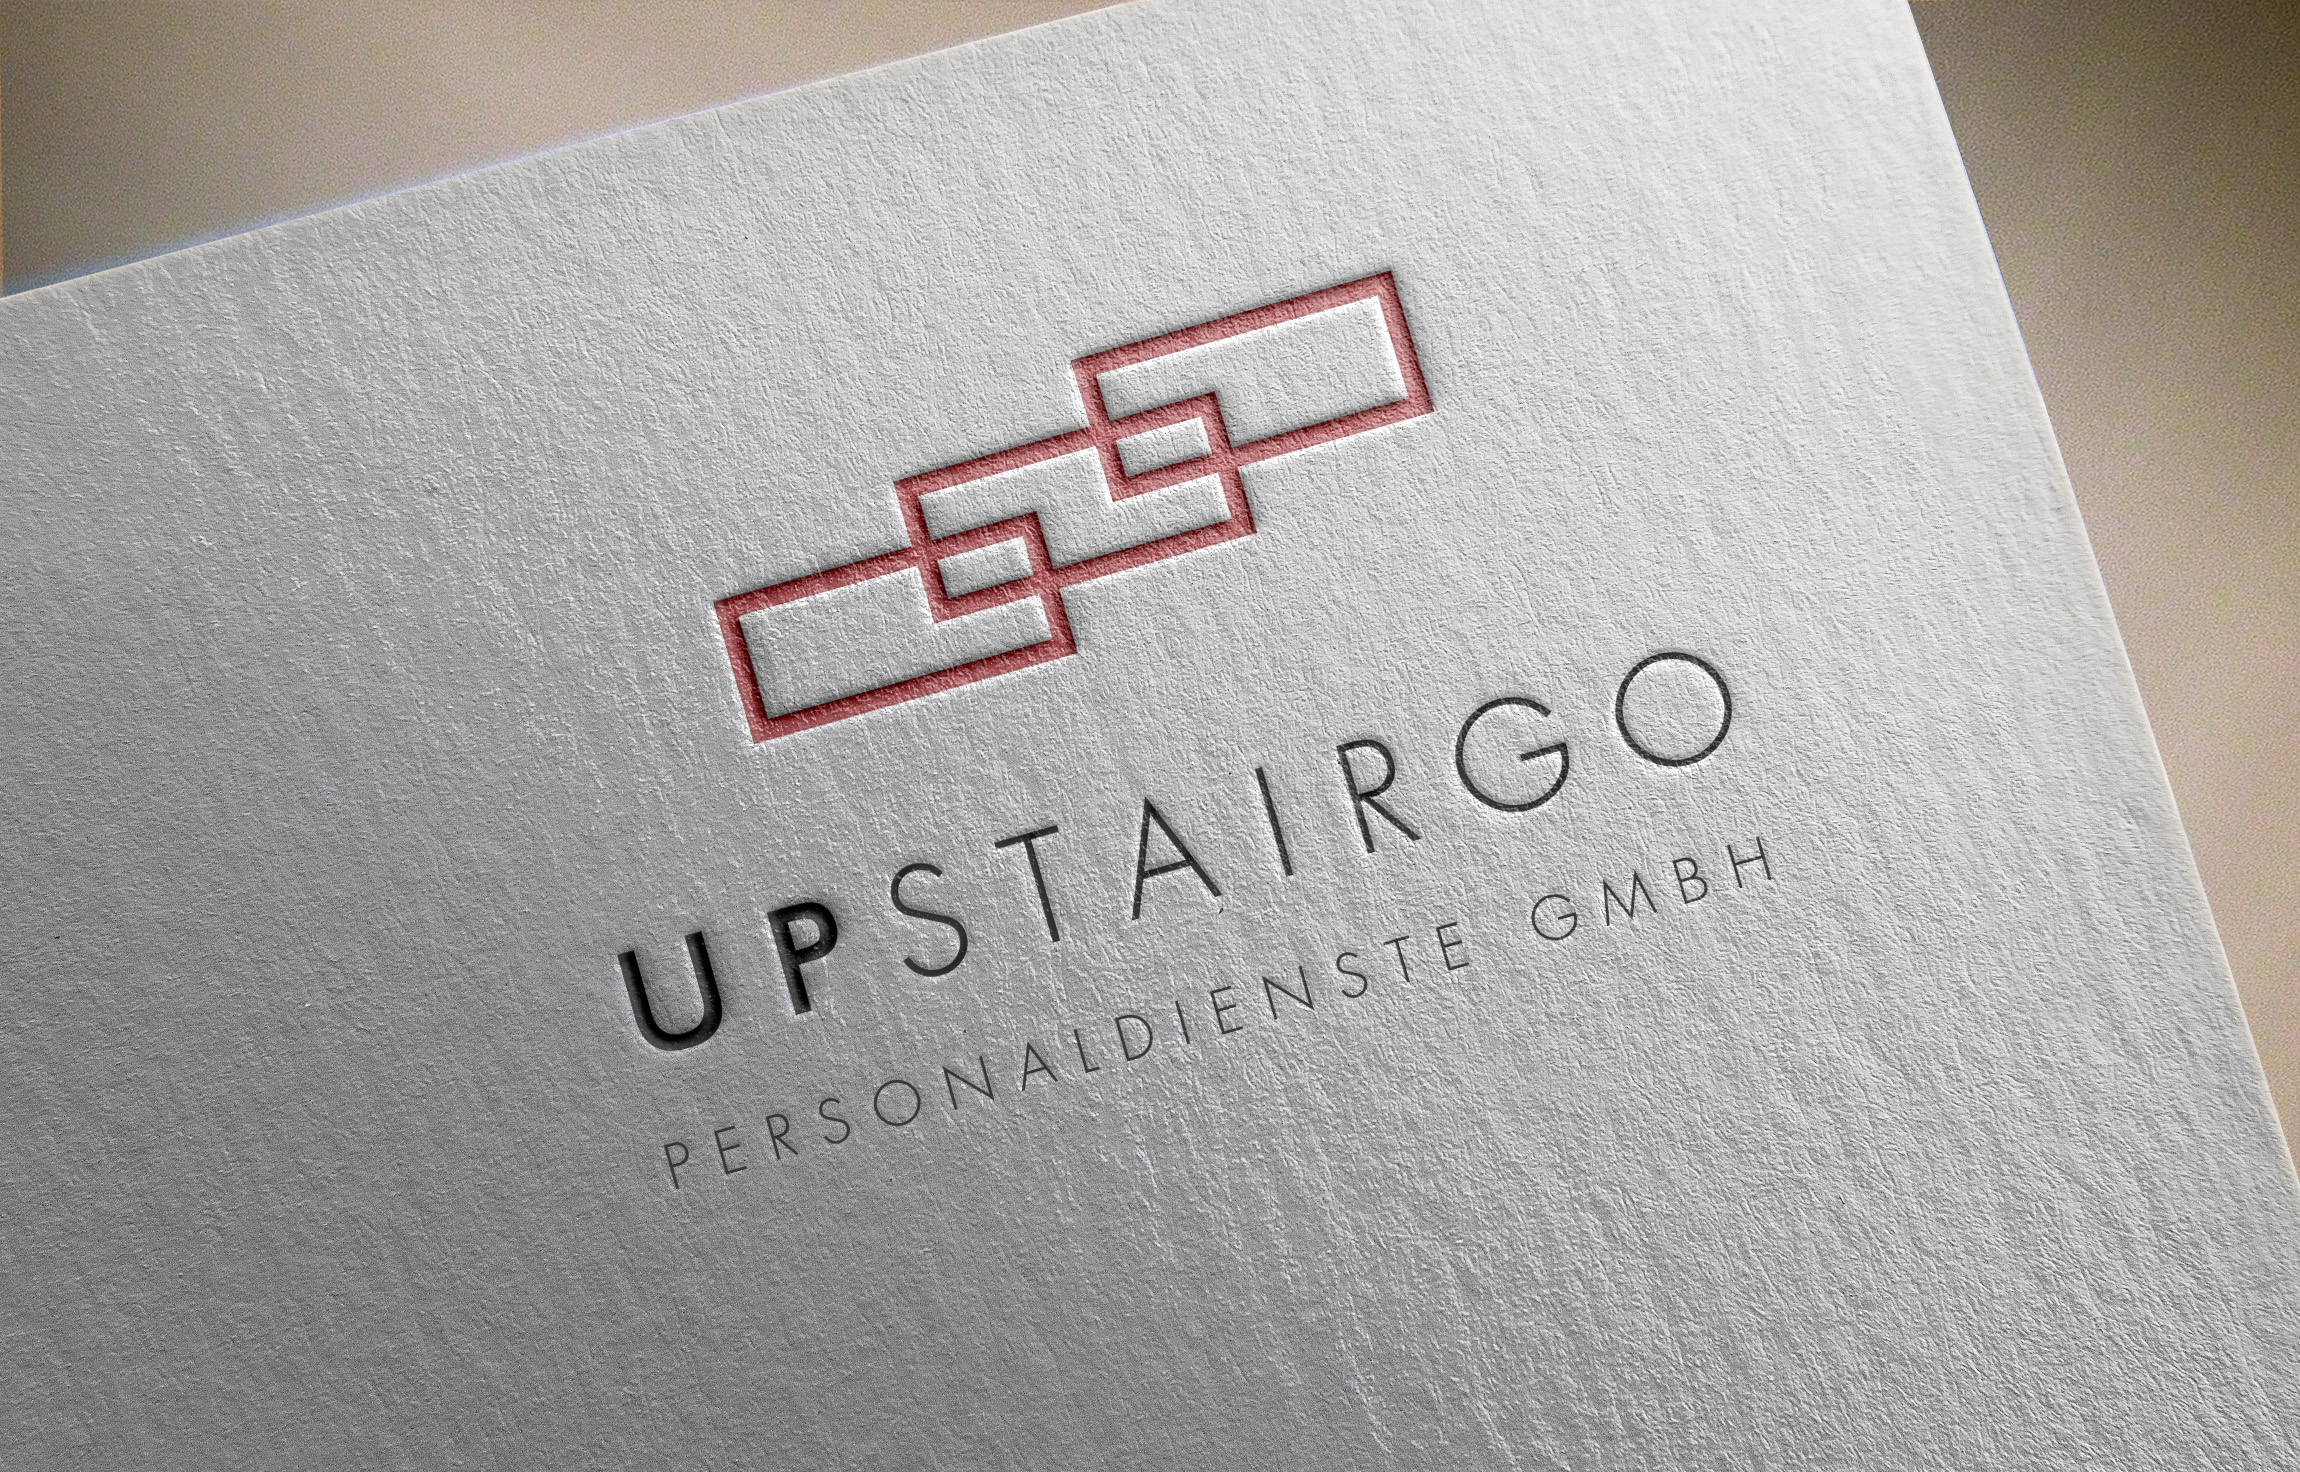 Upstairgo_Logo Mockup - Paper Edition 1 - by PuneDesign.jpg